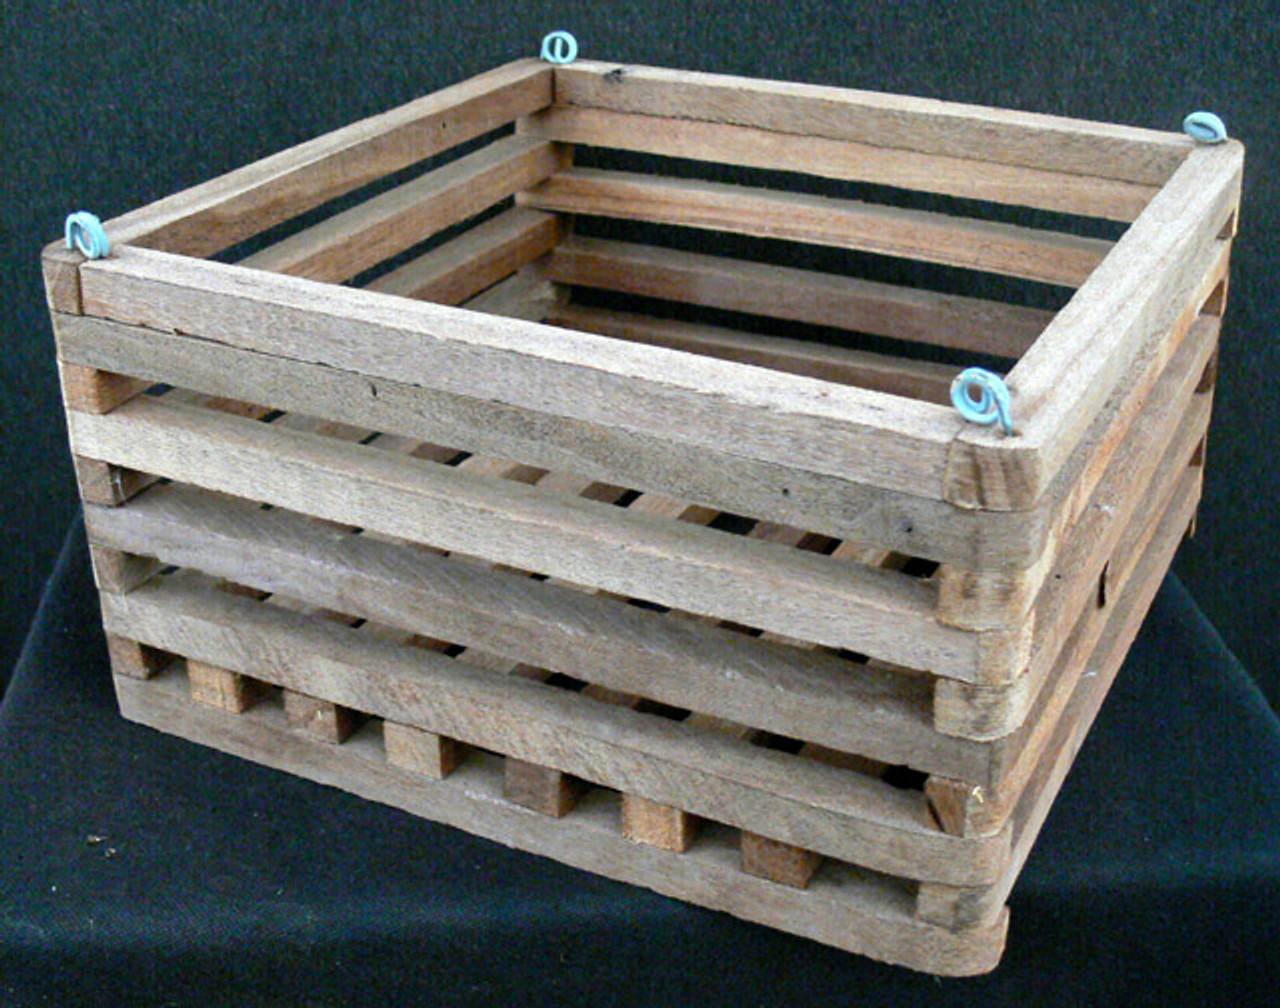 Wood Baskets - Square #